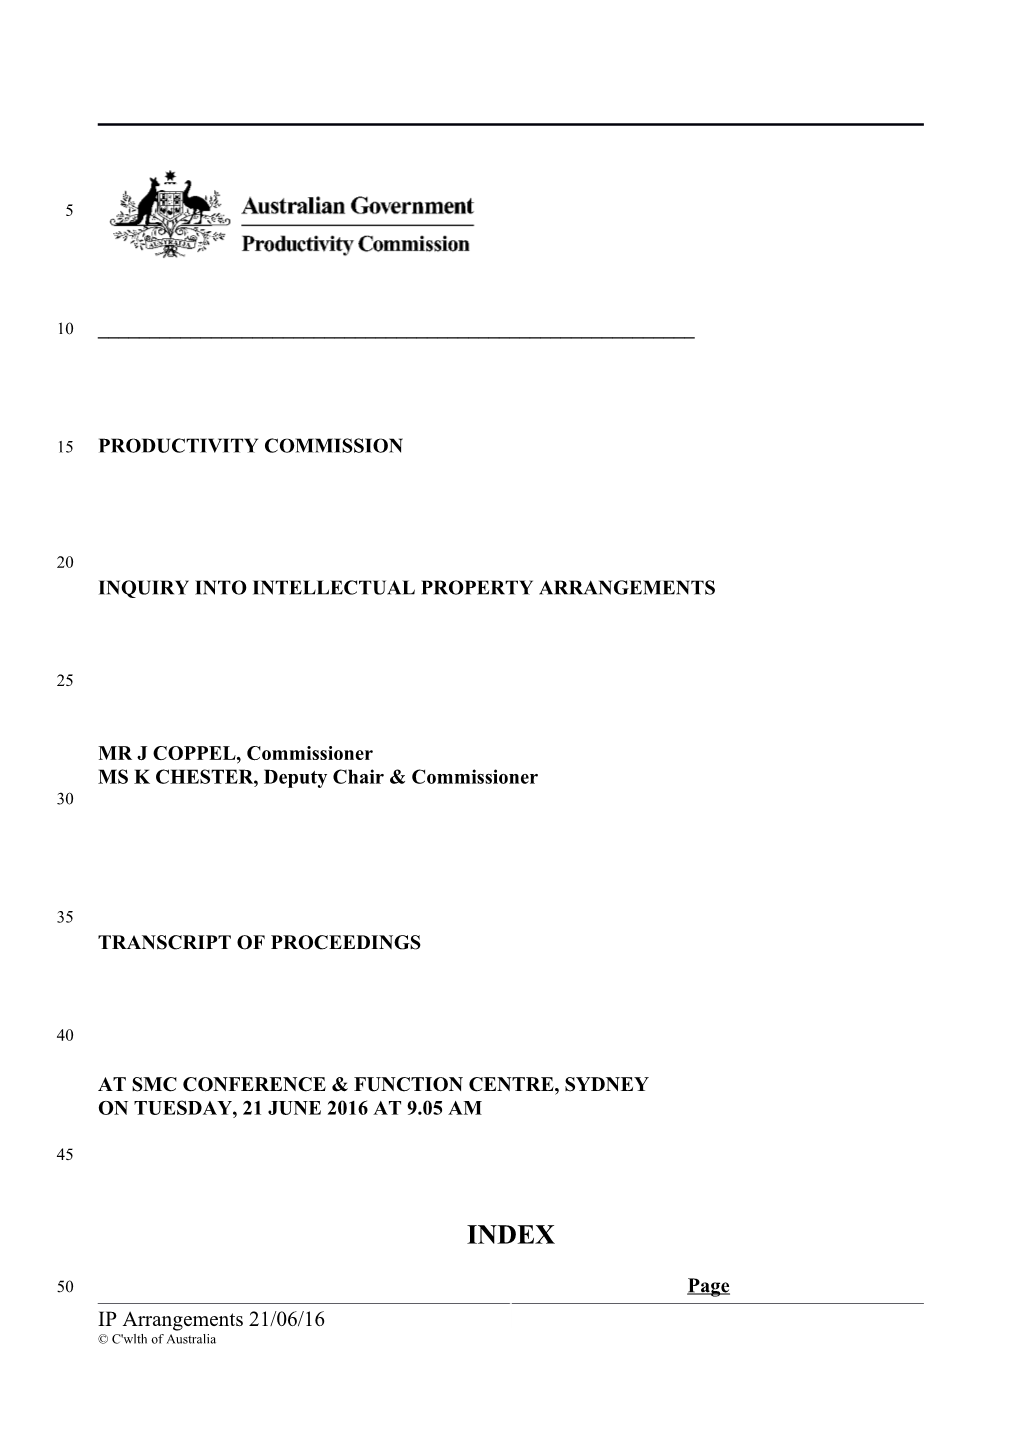 21 June 2016 - Sydney Public Hearing Transcript - Intellectual Property Arrangements